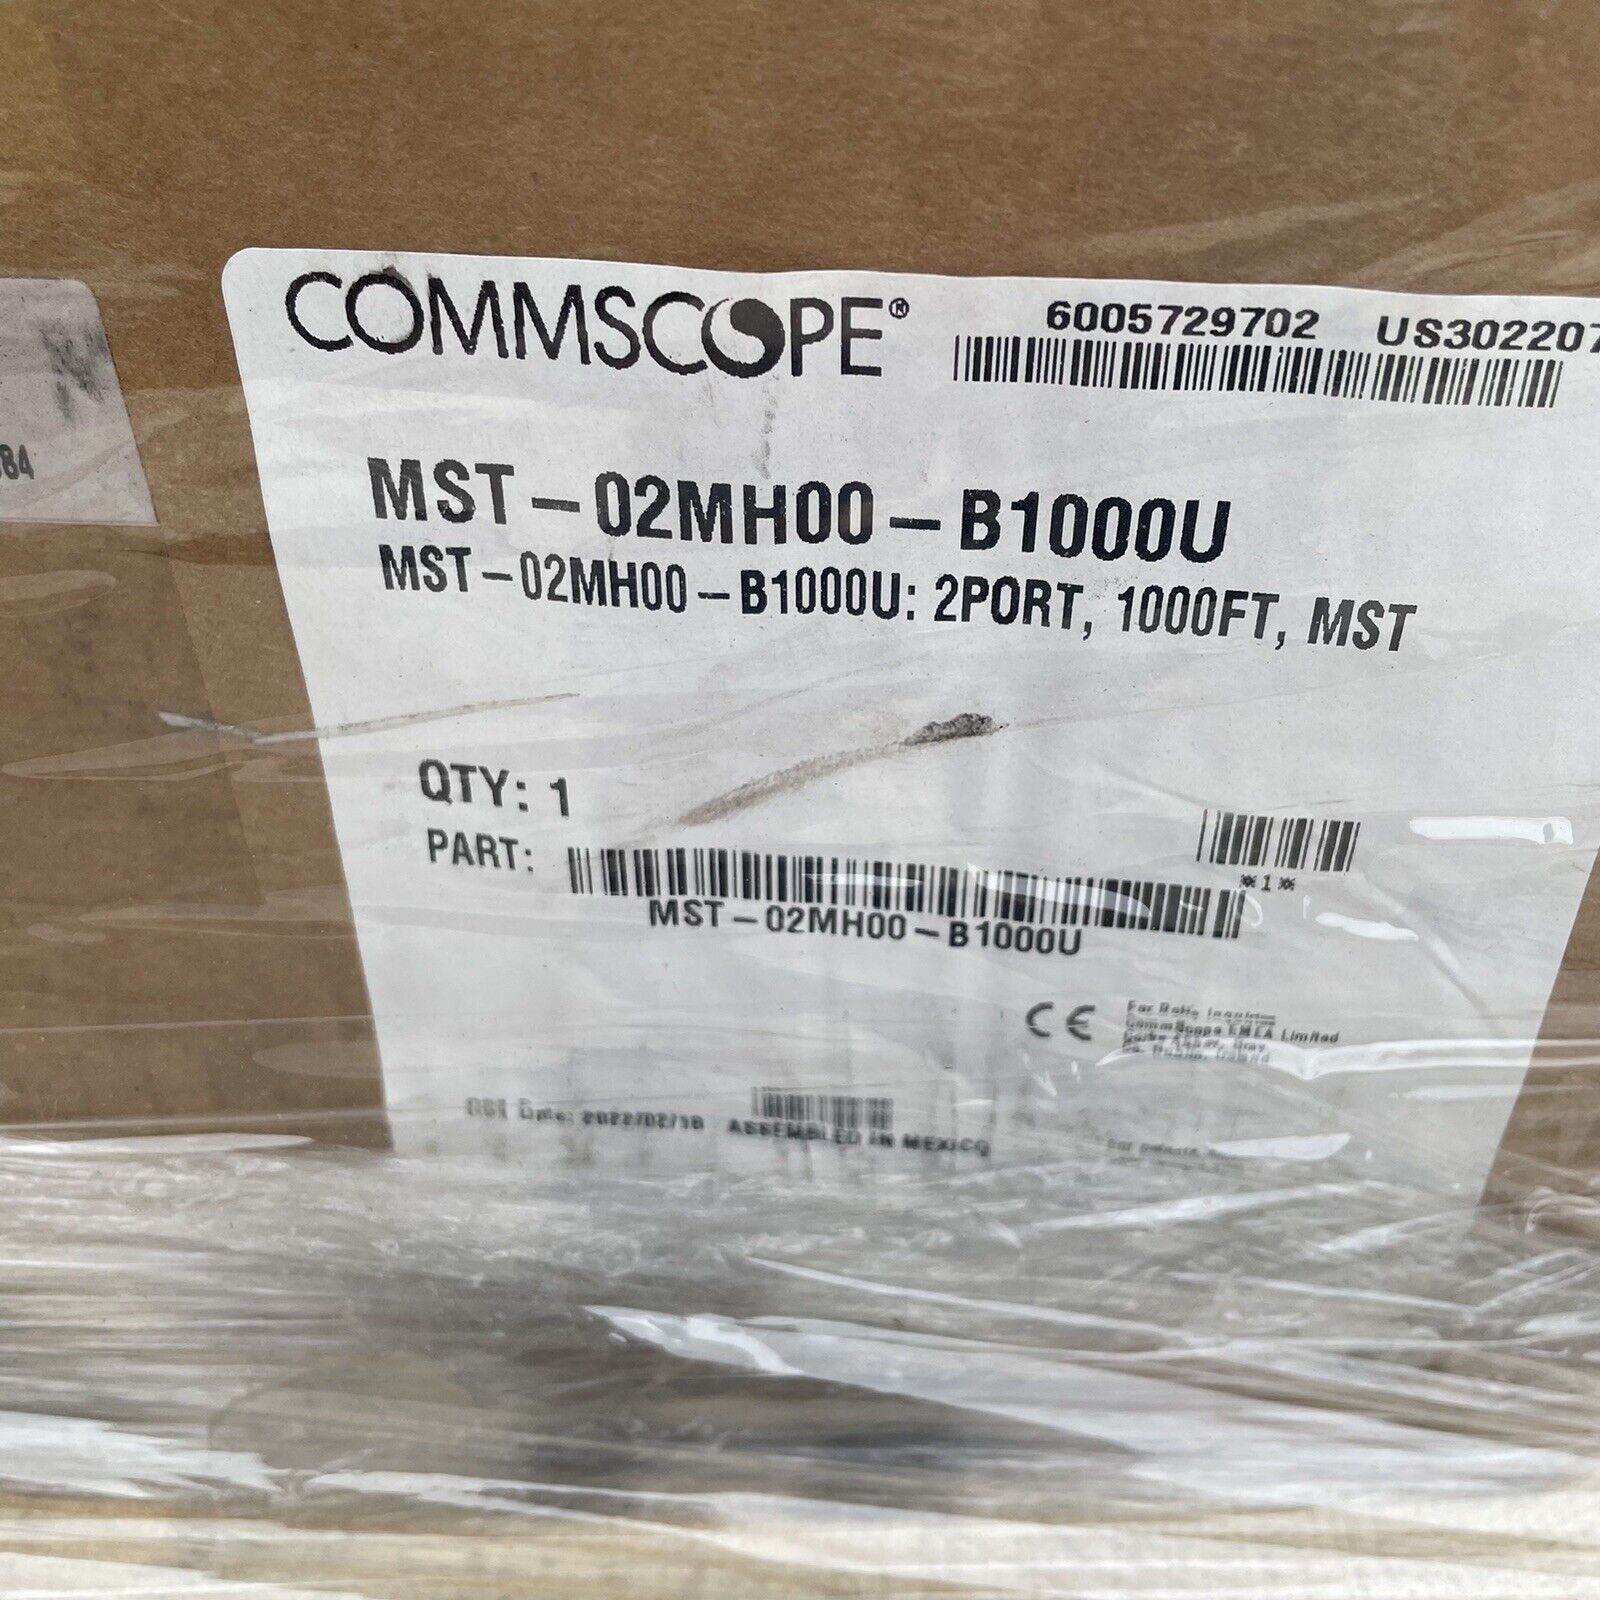 NEW Commscope MST-02MH00-B1000U Fiber Optic Multiport Service Terminal